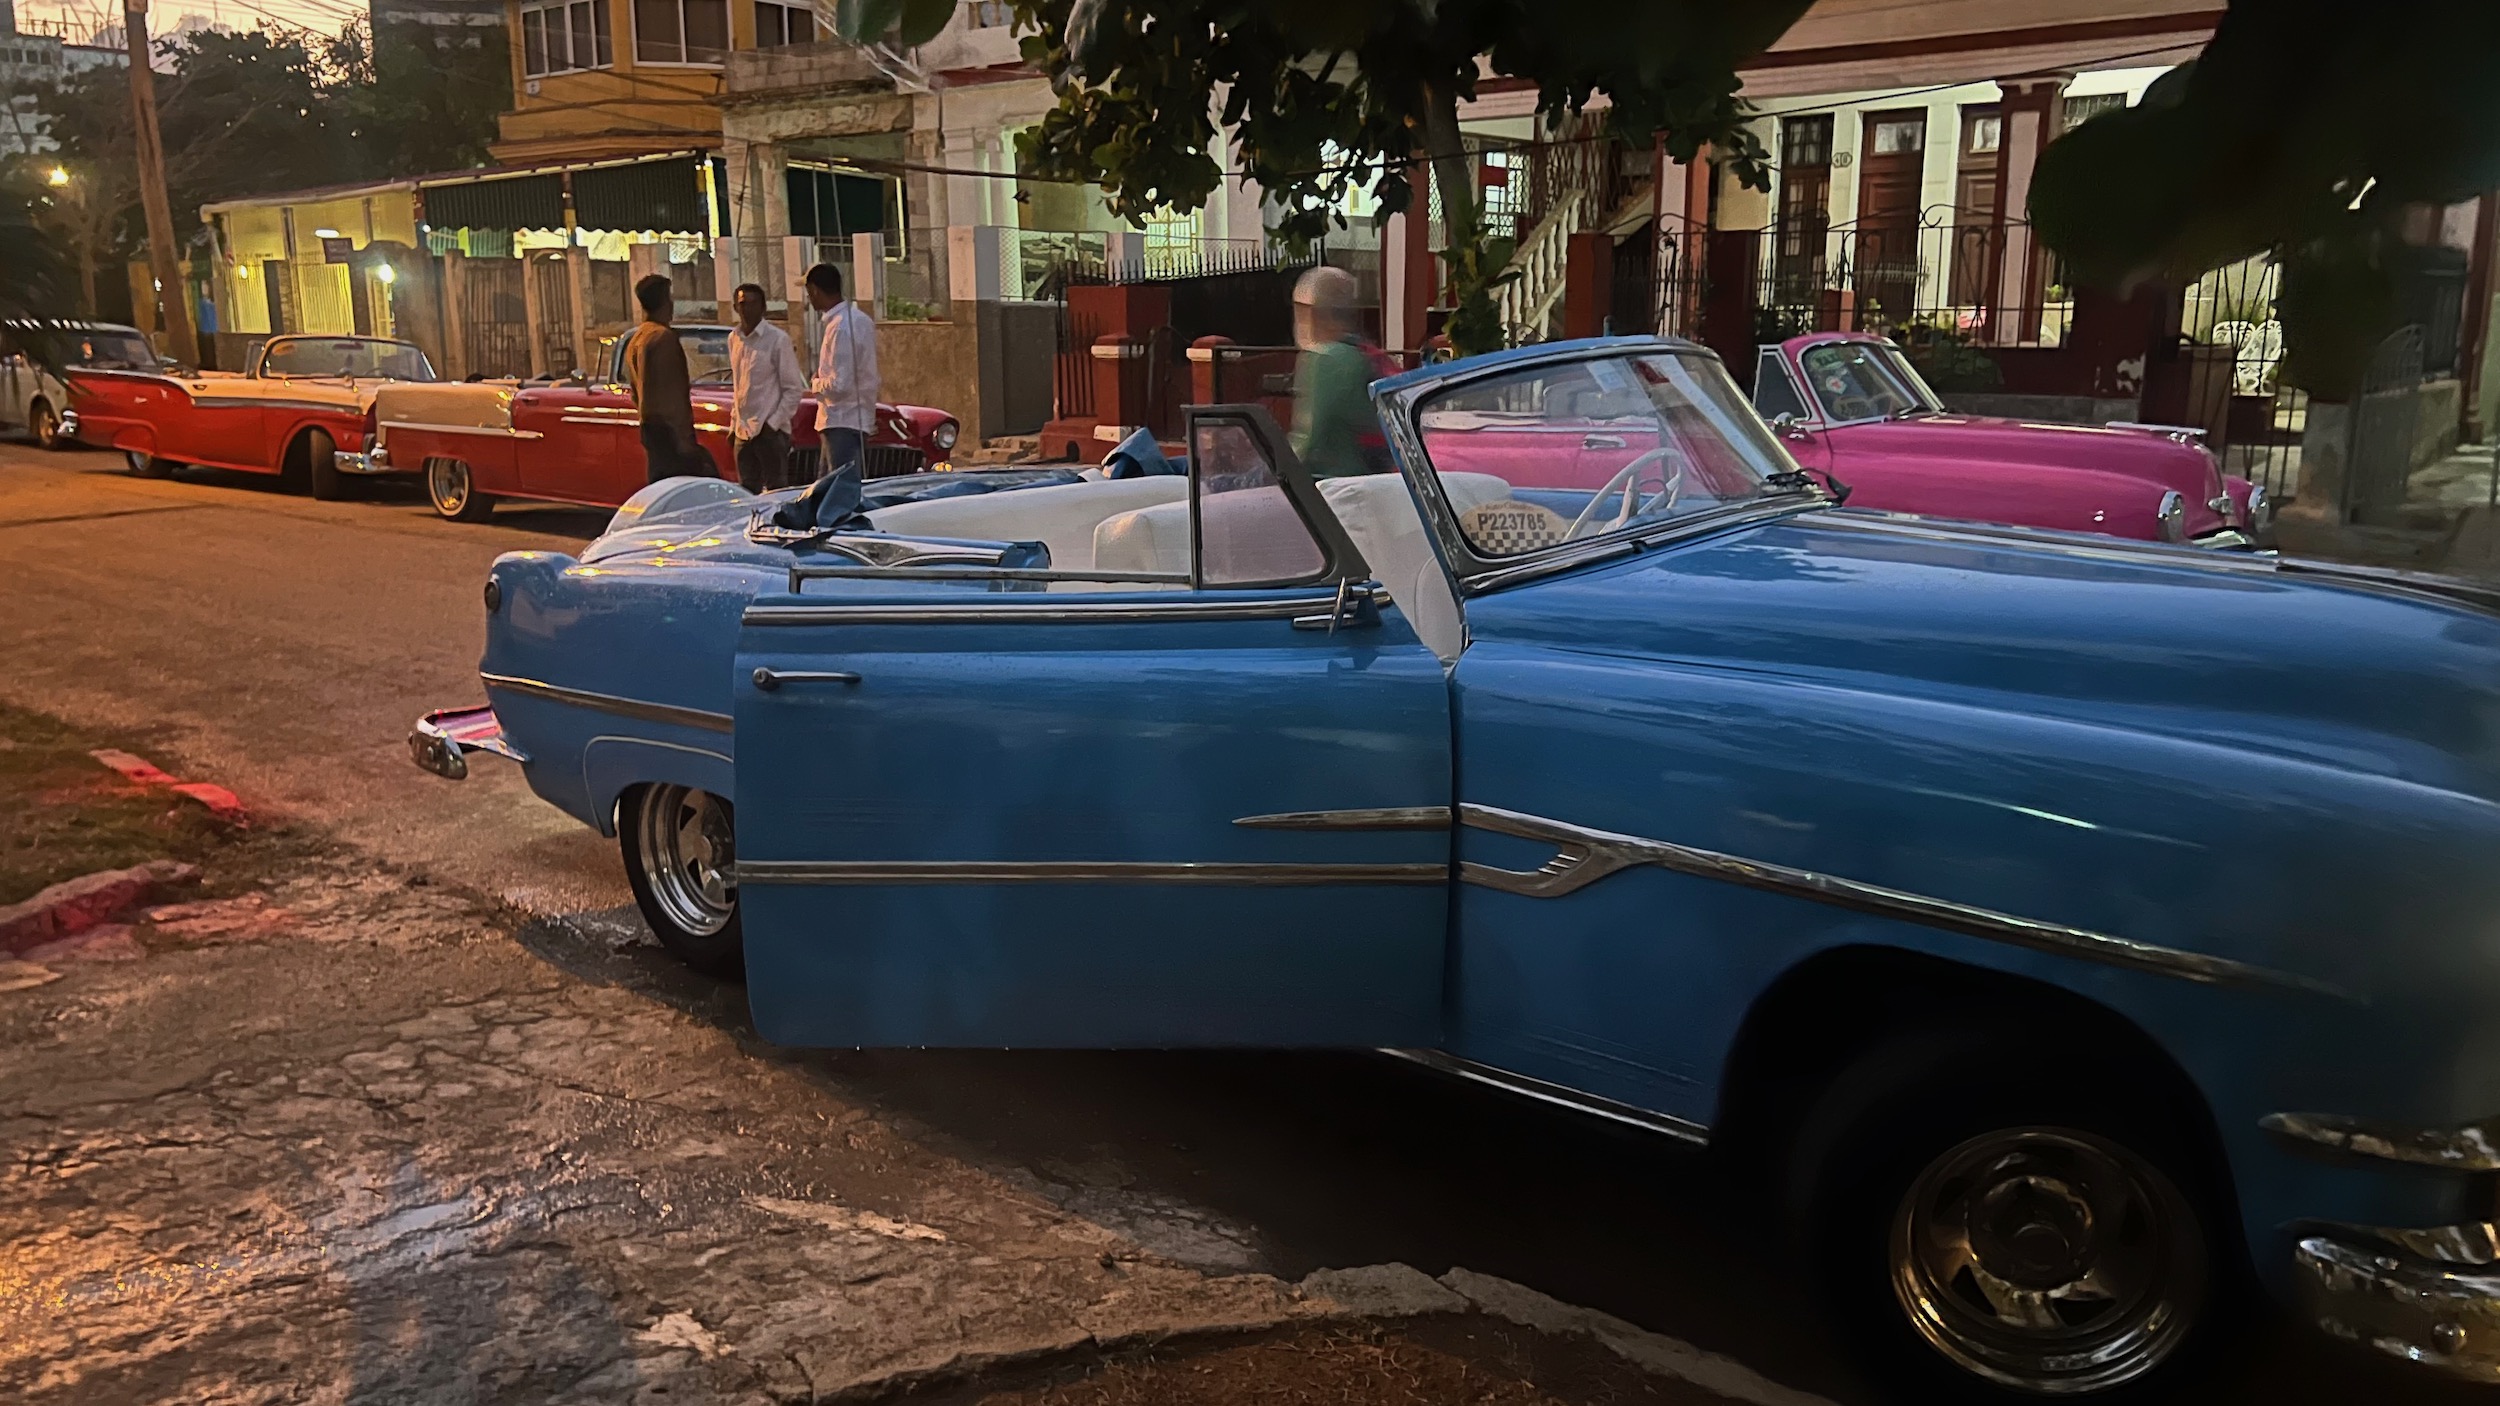 Cuba – The End